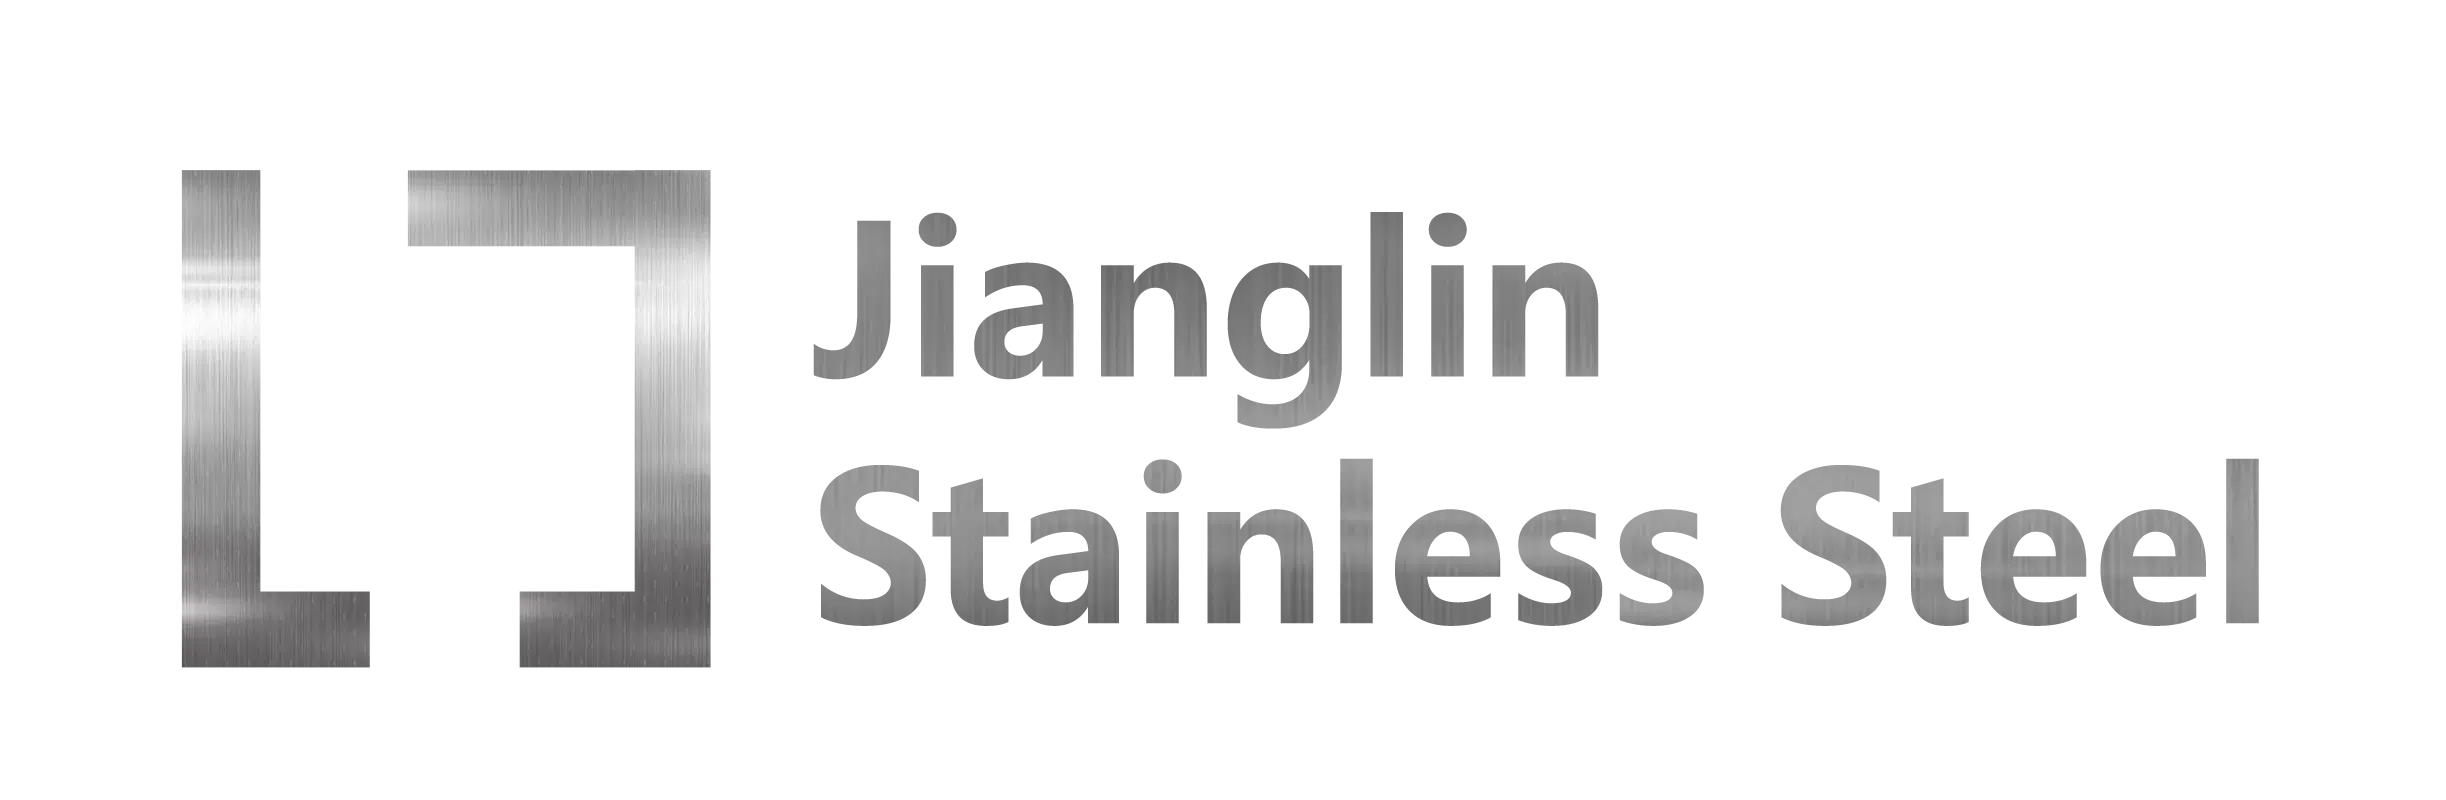 Jianglin Stainless Steel